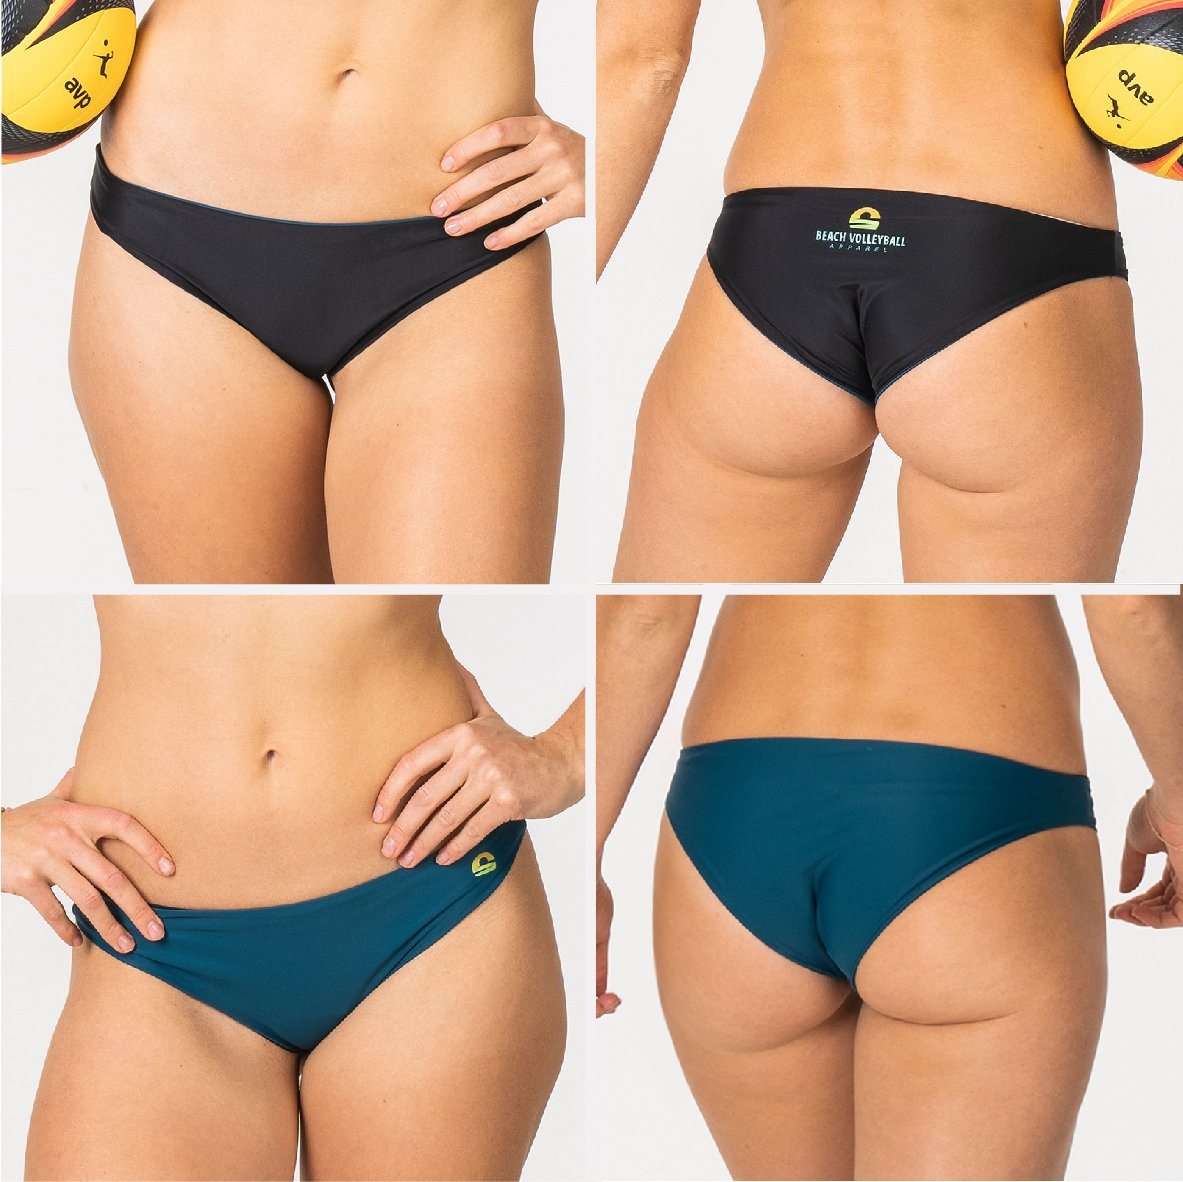 Beach Volleyball Apparel Bikini-Hose Beachvolleyball Sportbikini Slip Unterteil zum Baden Bikini Bottom von Beach Volleyball Apparel